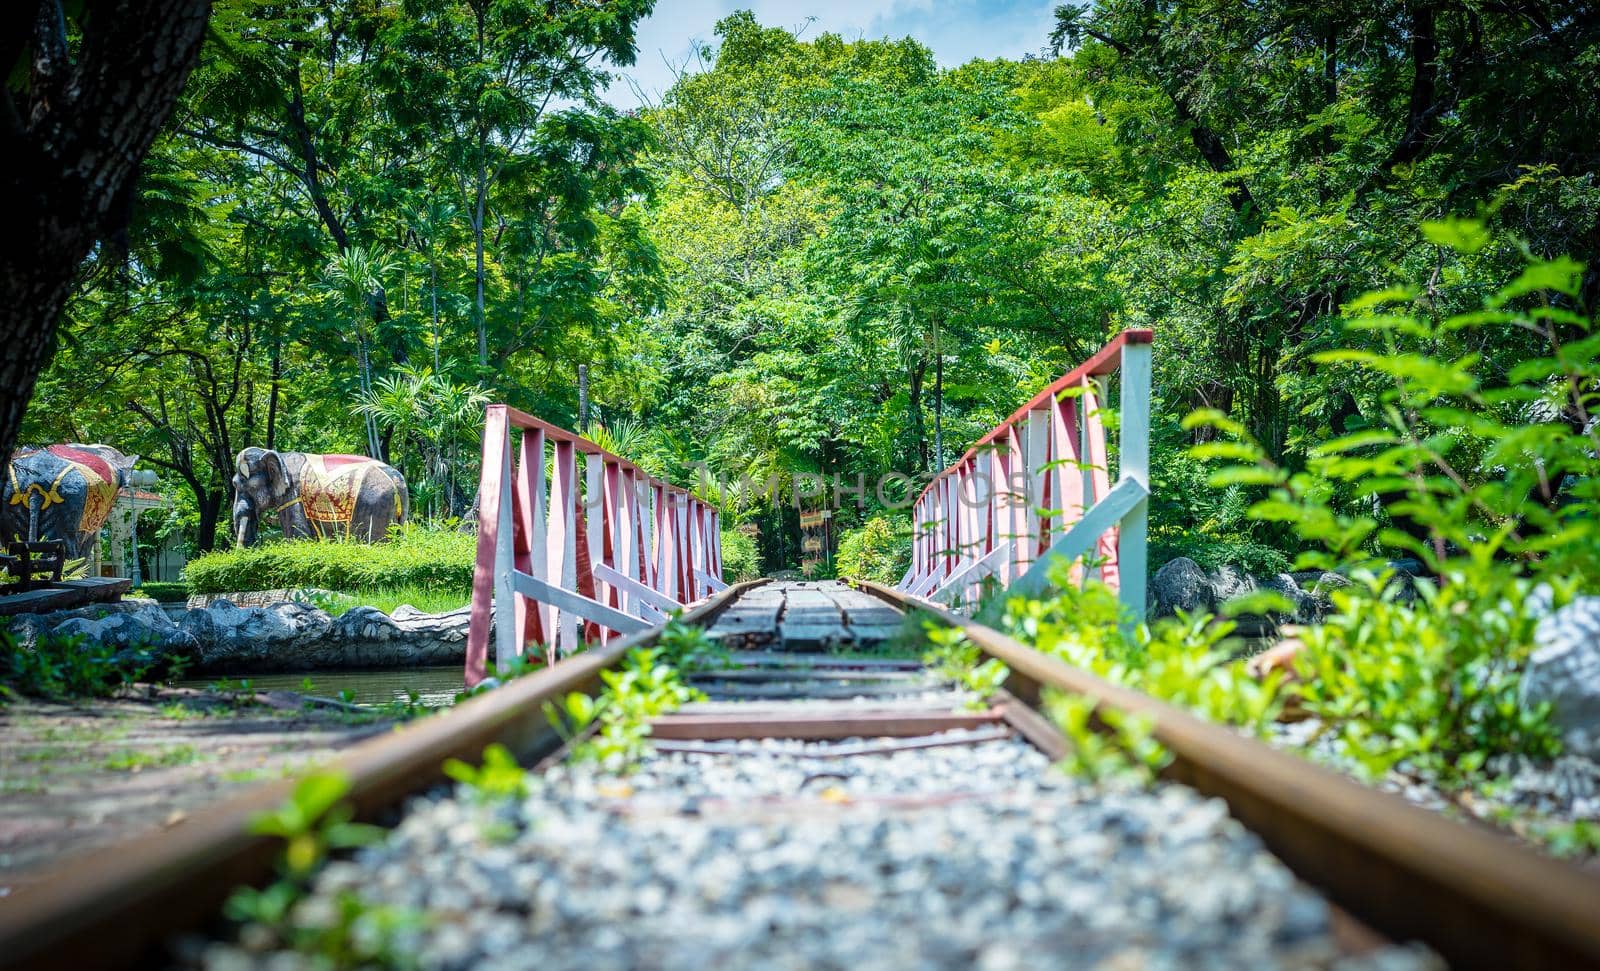 Railroad tracks through the park by domonite